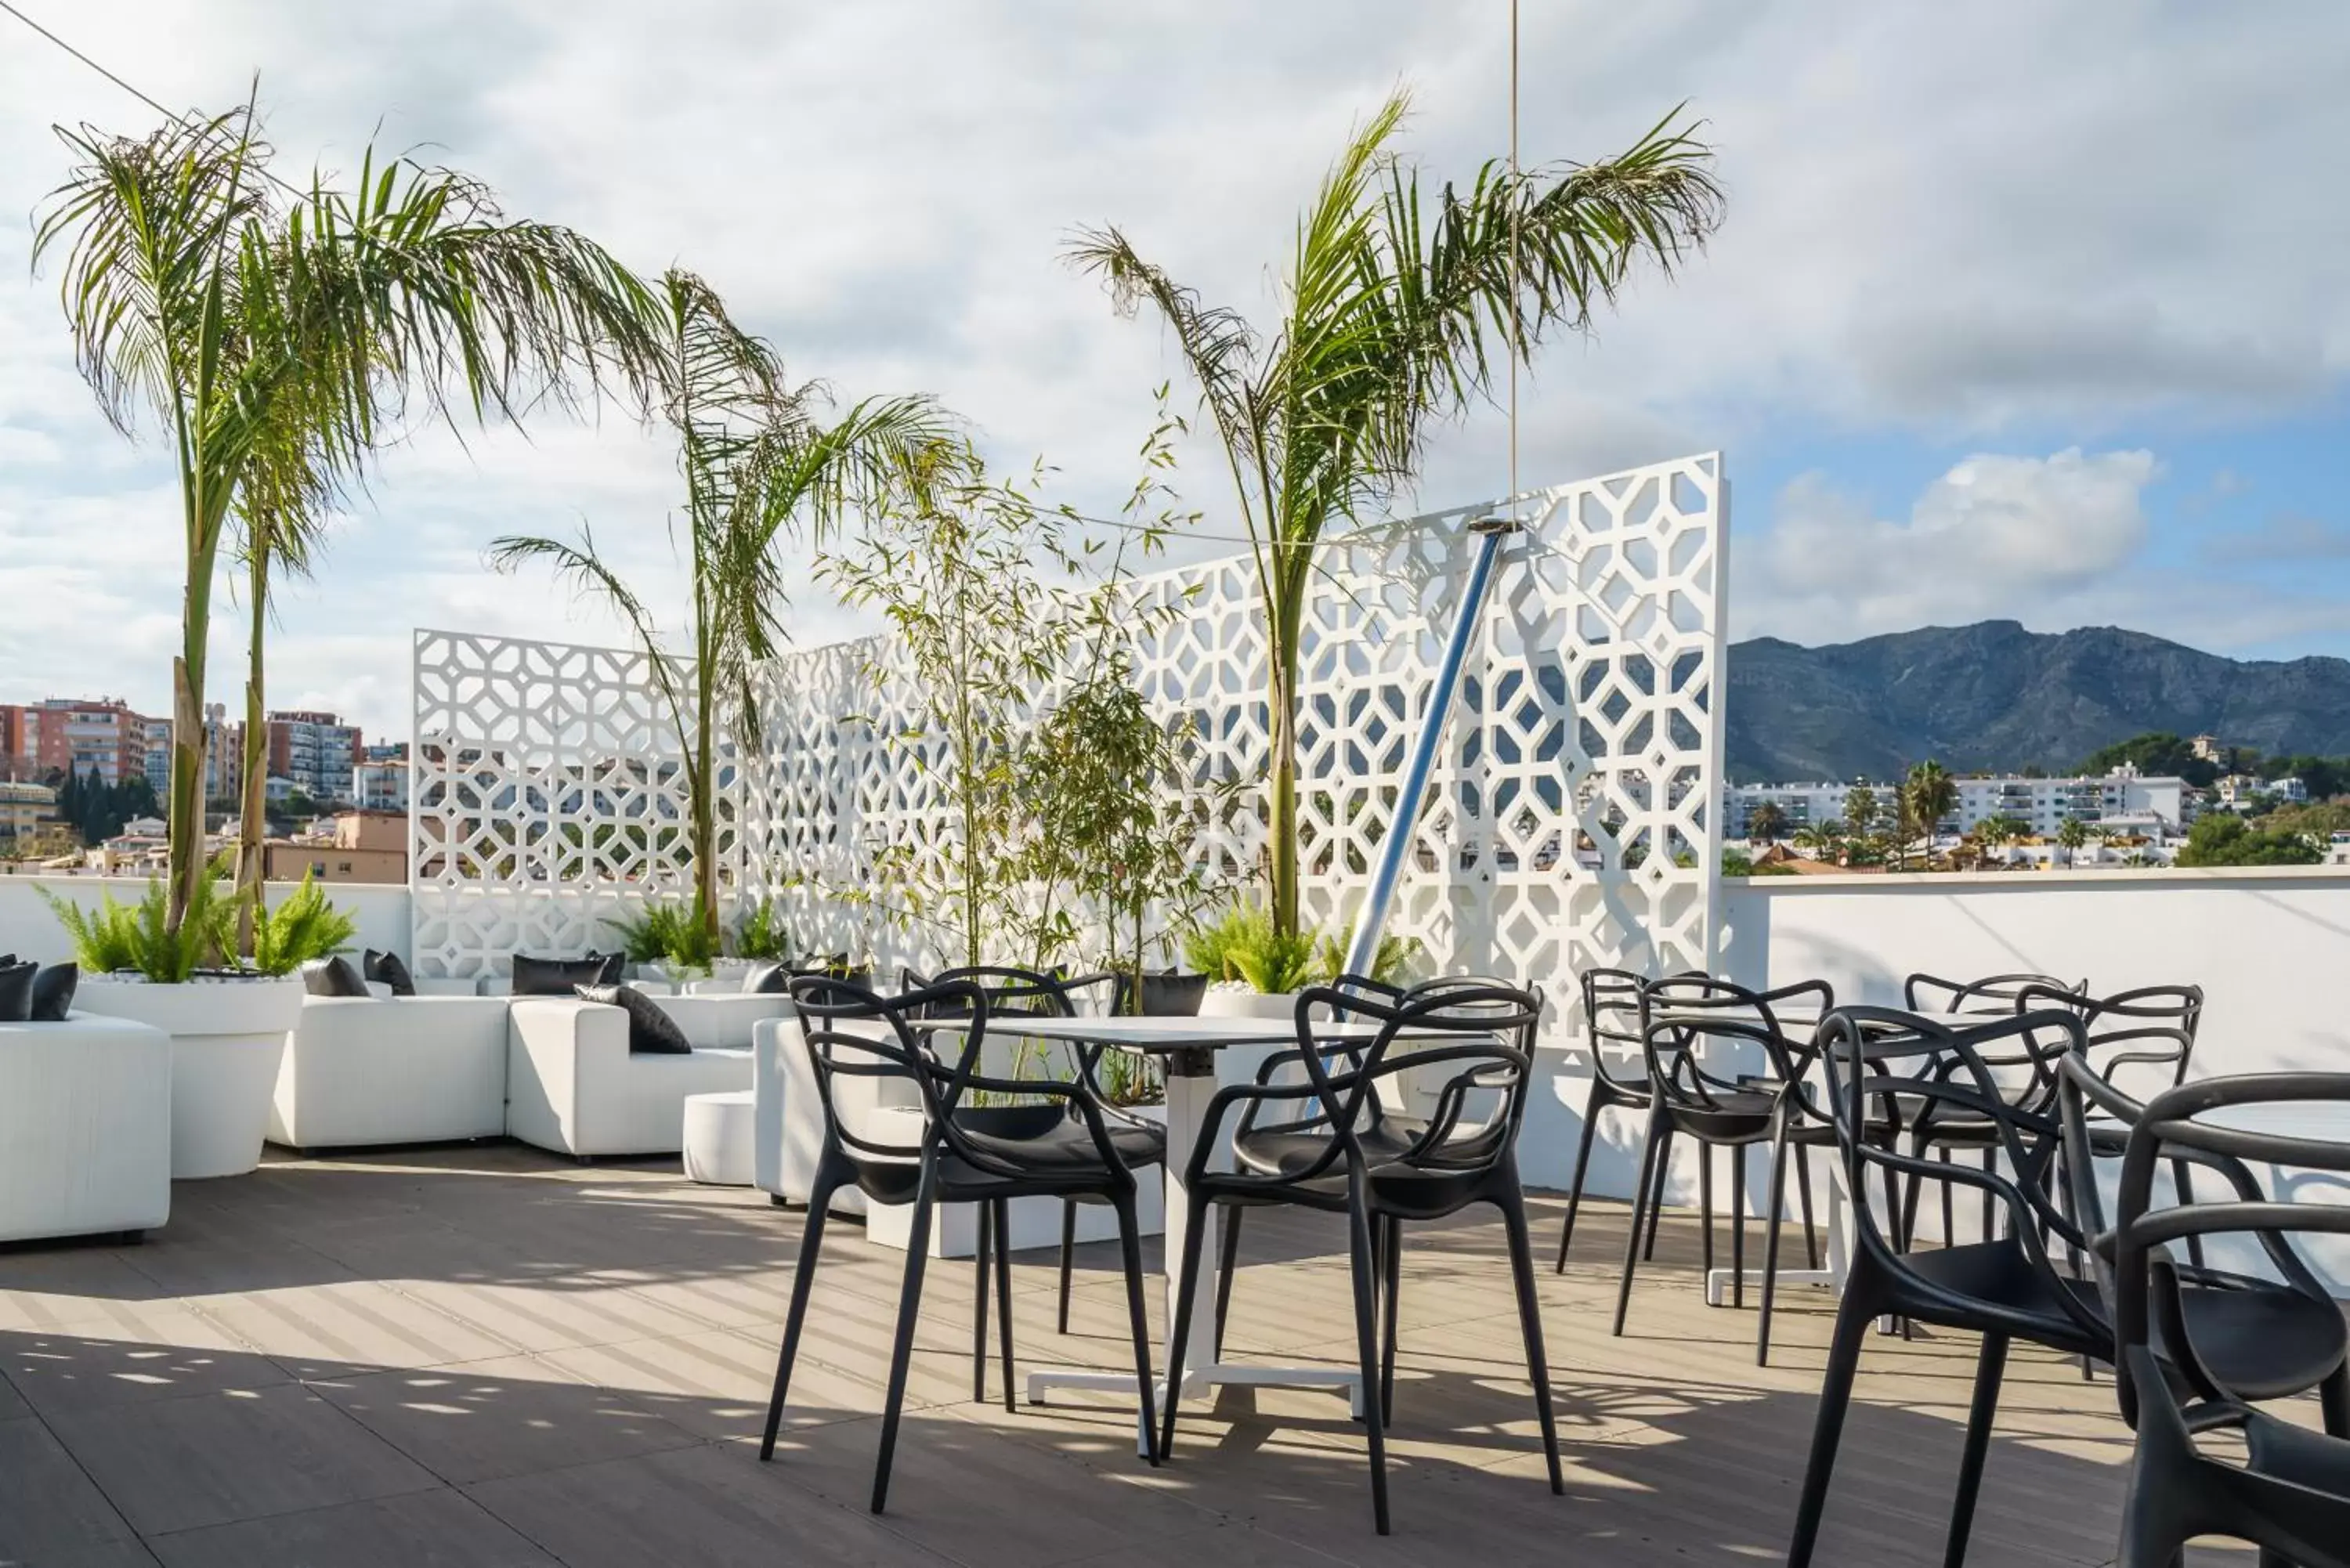 Area and facilities, Restaurant/Places to Eat in Costa del Sol Torremolinos Hotel